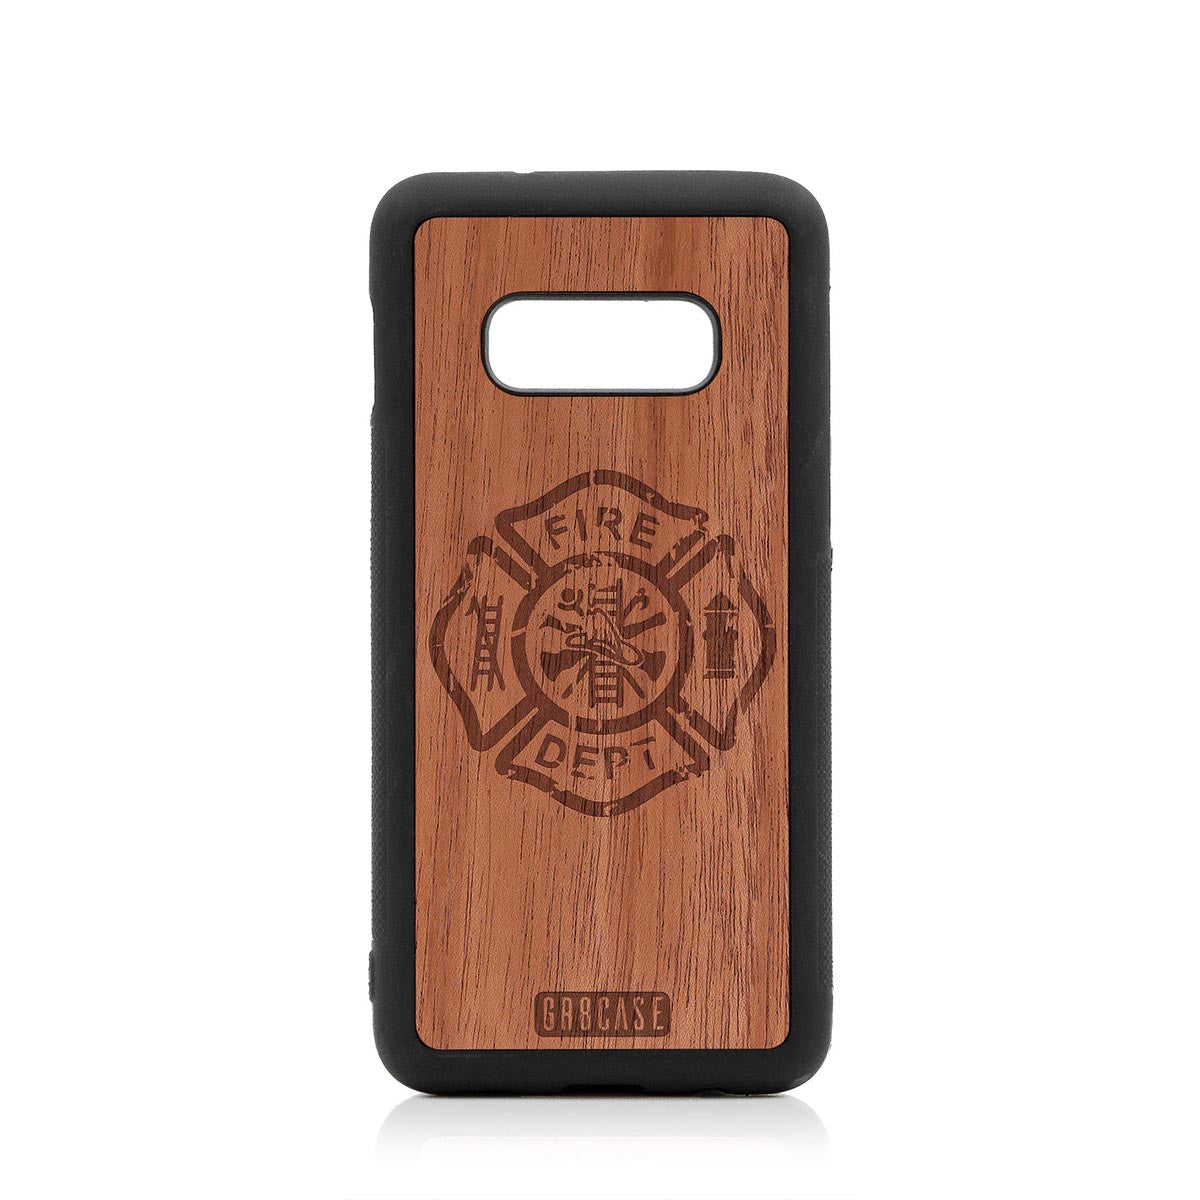 Fire Department Design Wood Case Samsung Galaxy S10E by GR8CASE